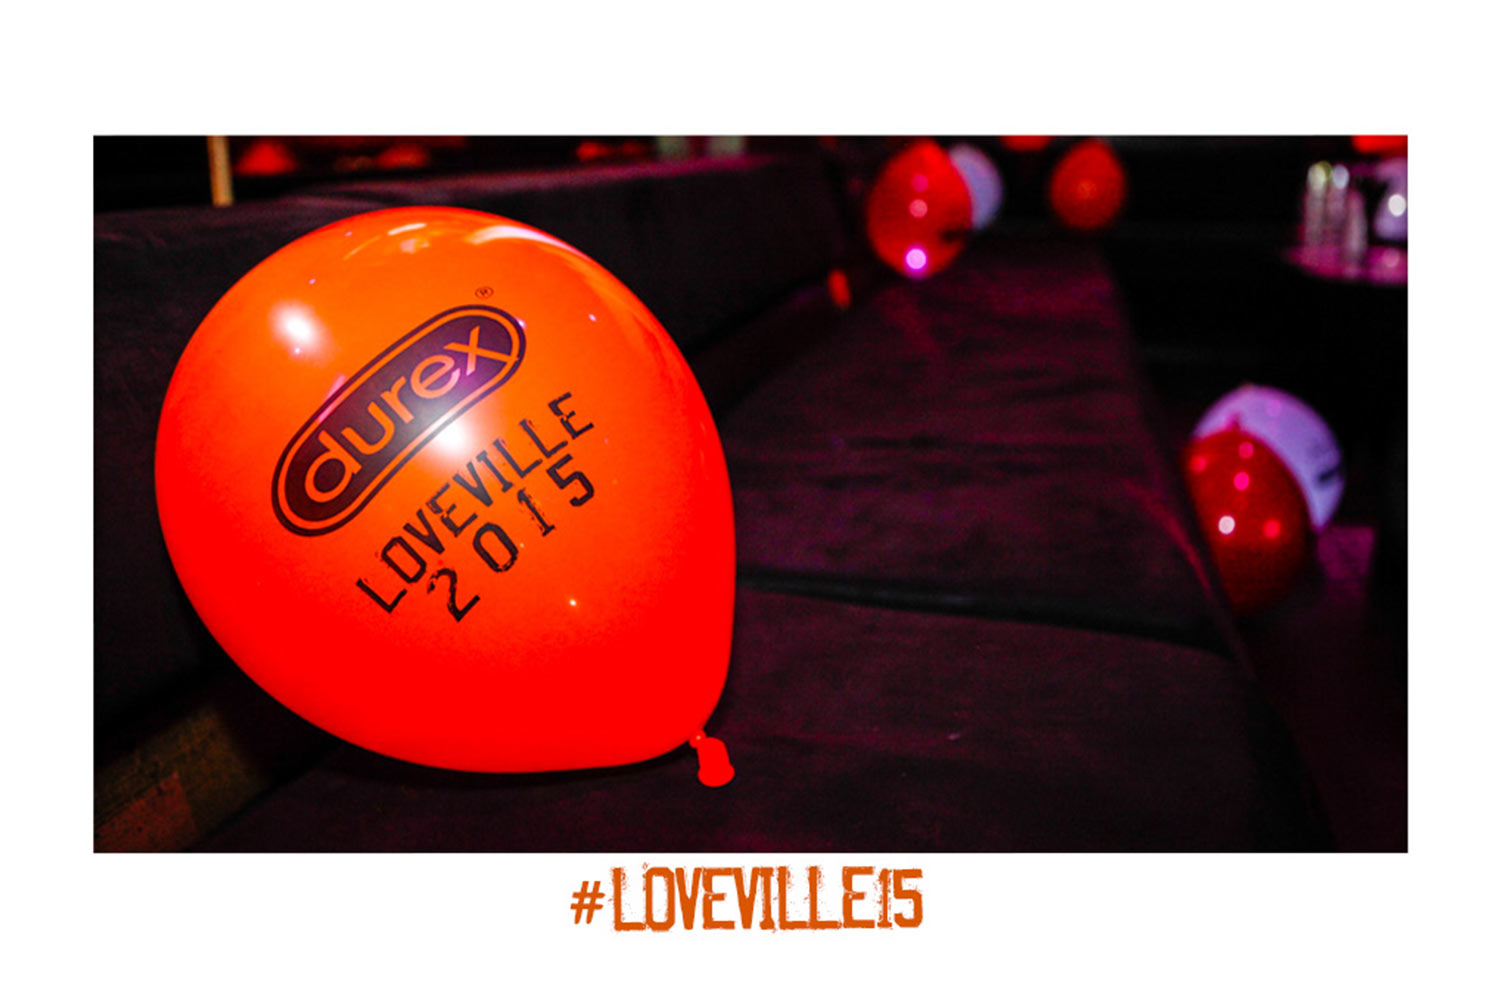 Project Durex Contest Loveville 2015 - Make love Make Energy